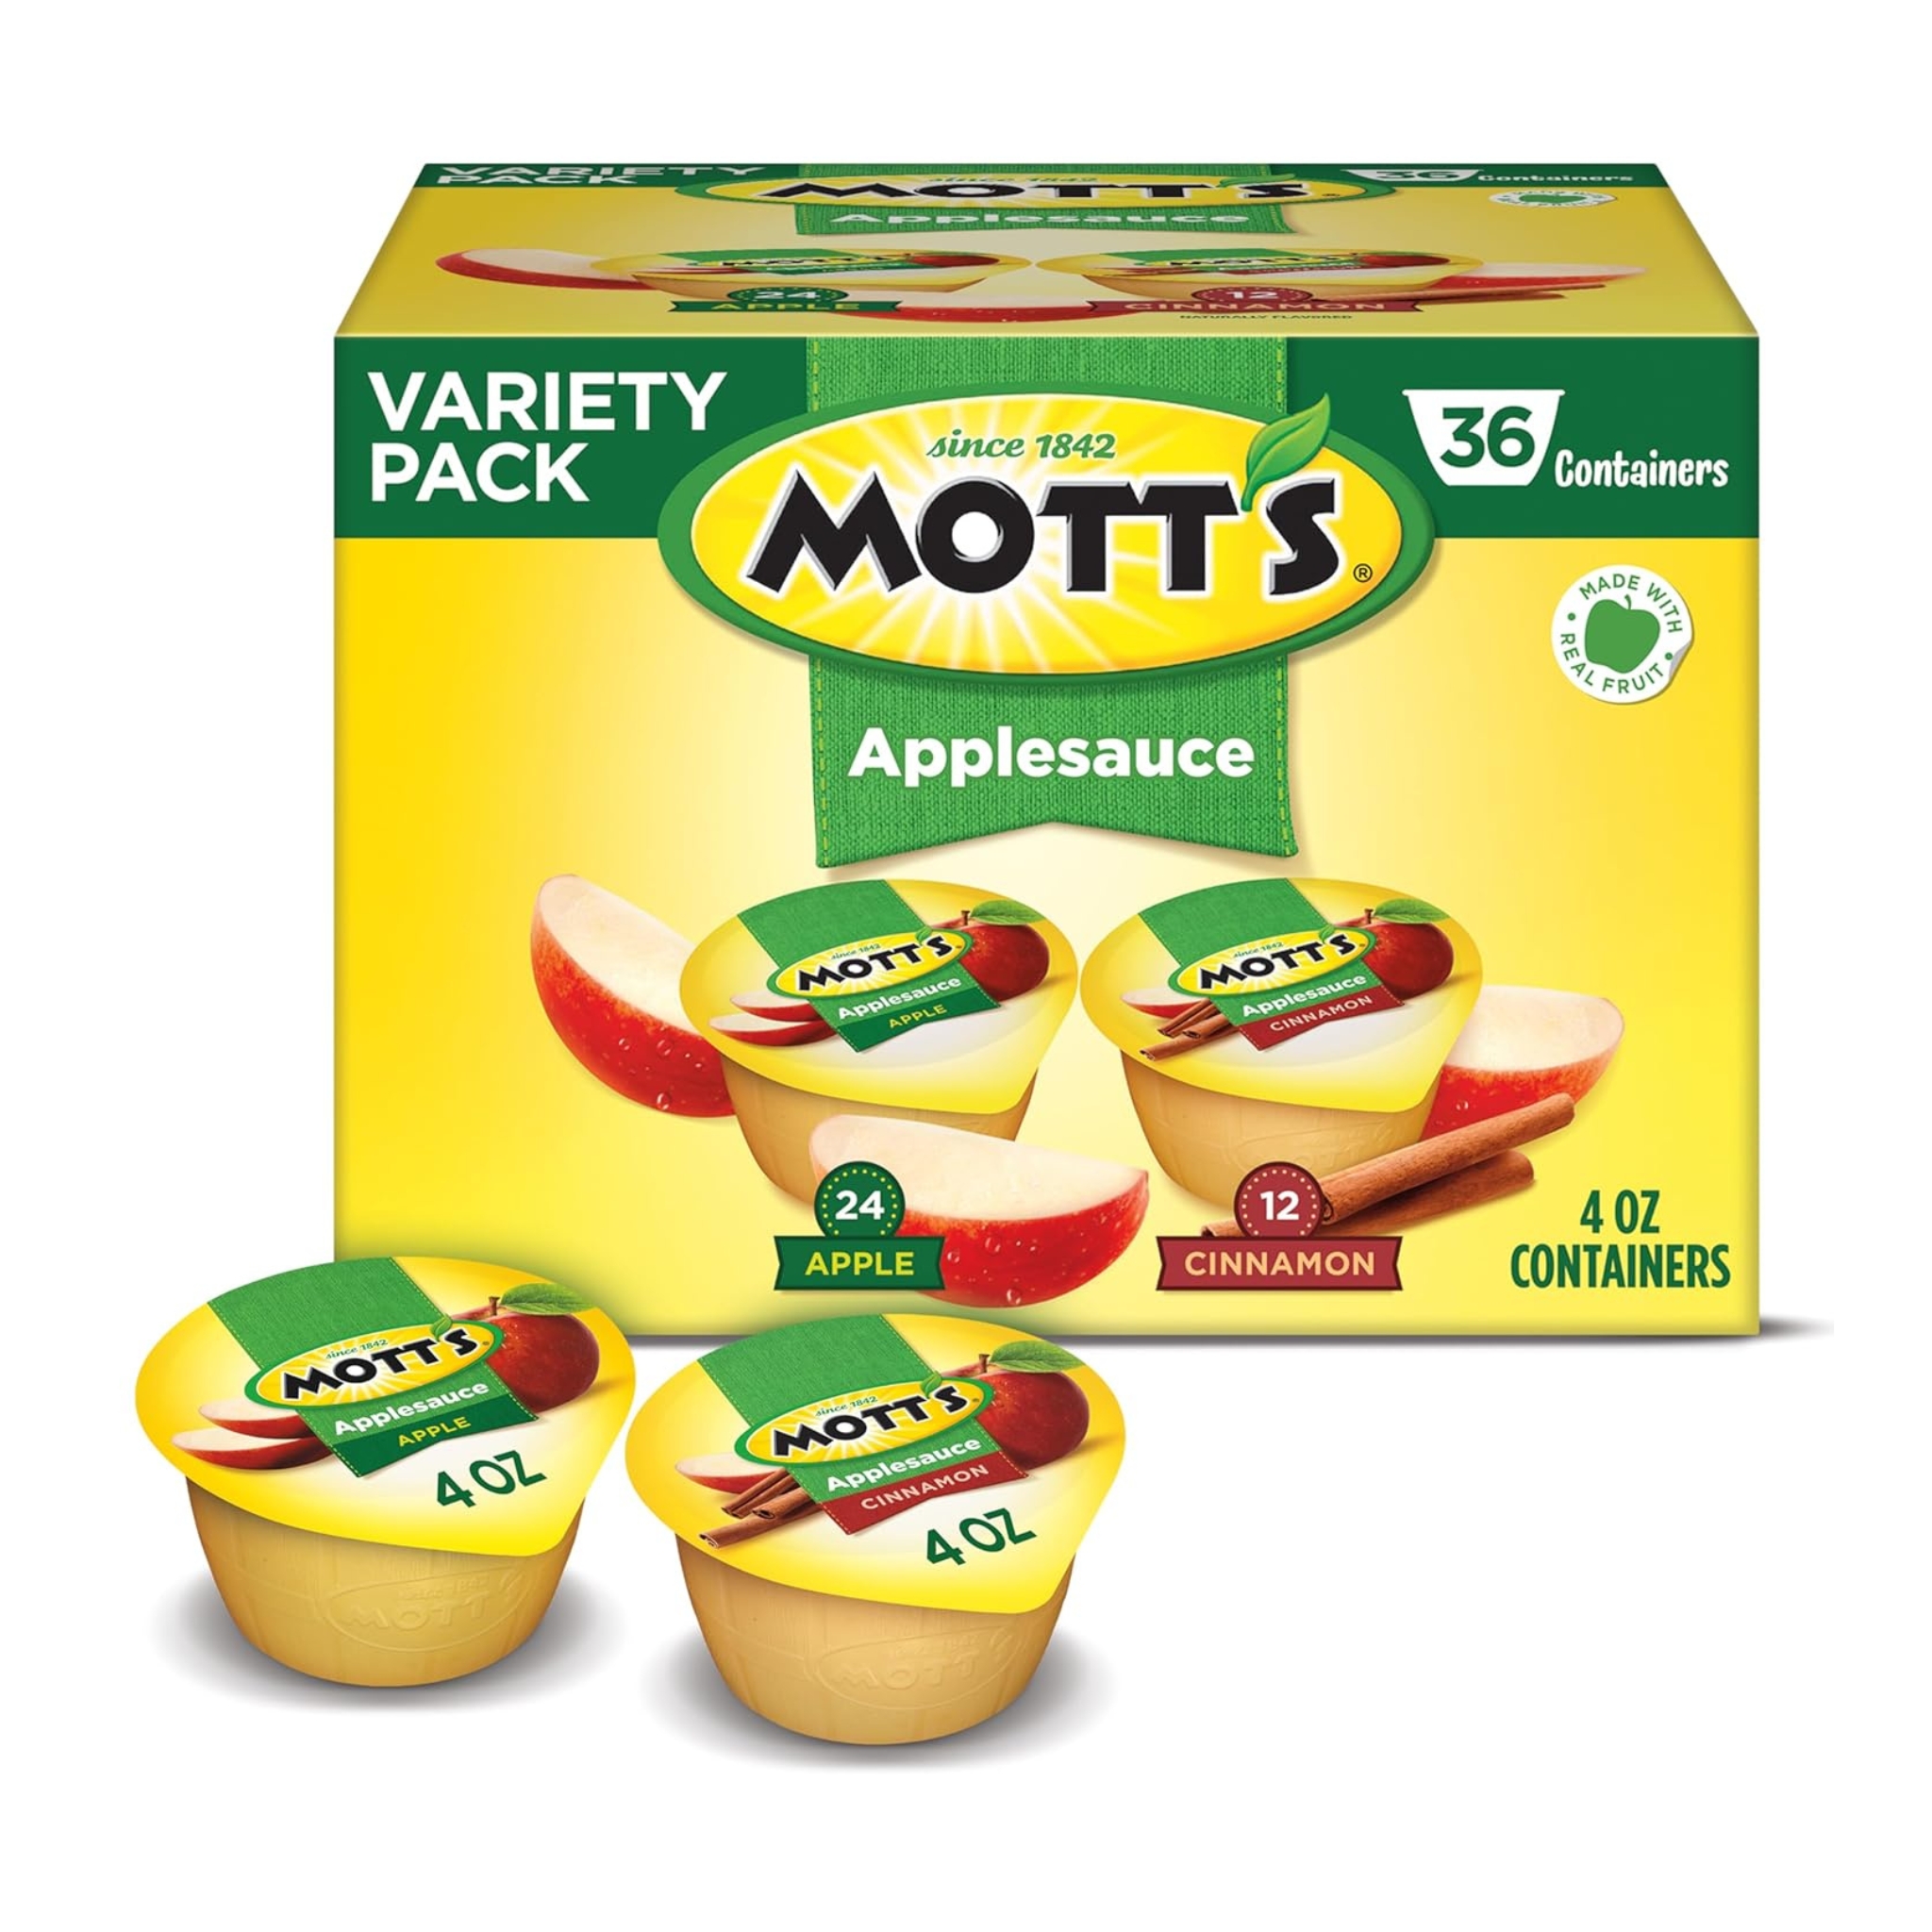 Mott’s Apple & Cinnamon Variety Pack Applesauce, 4 oz cups, 36 count